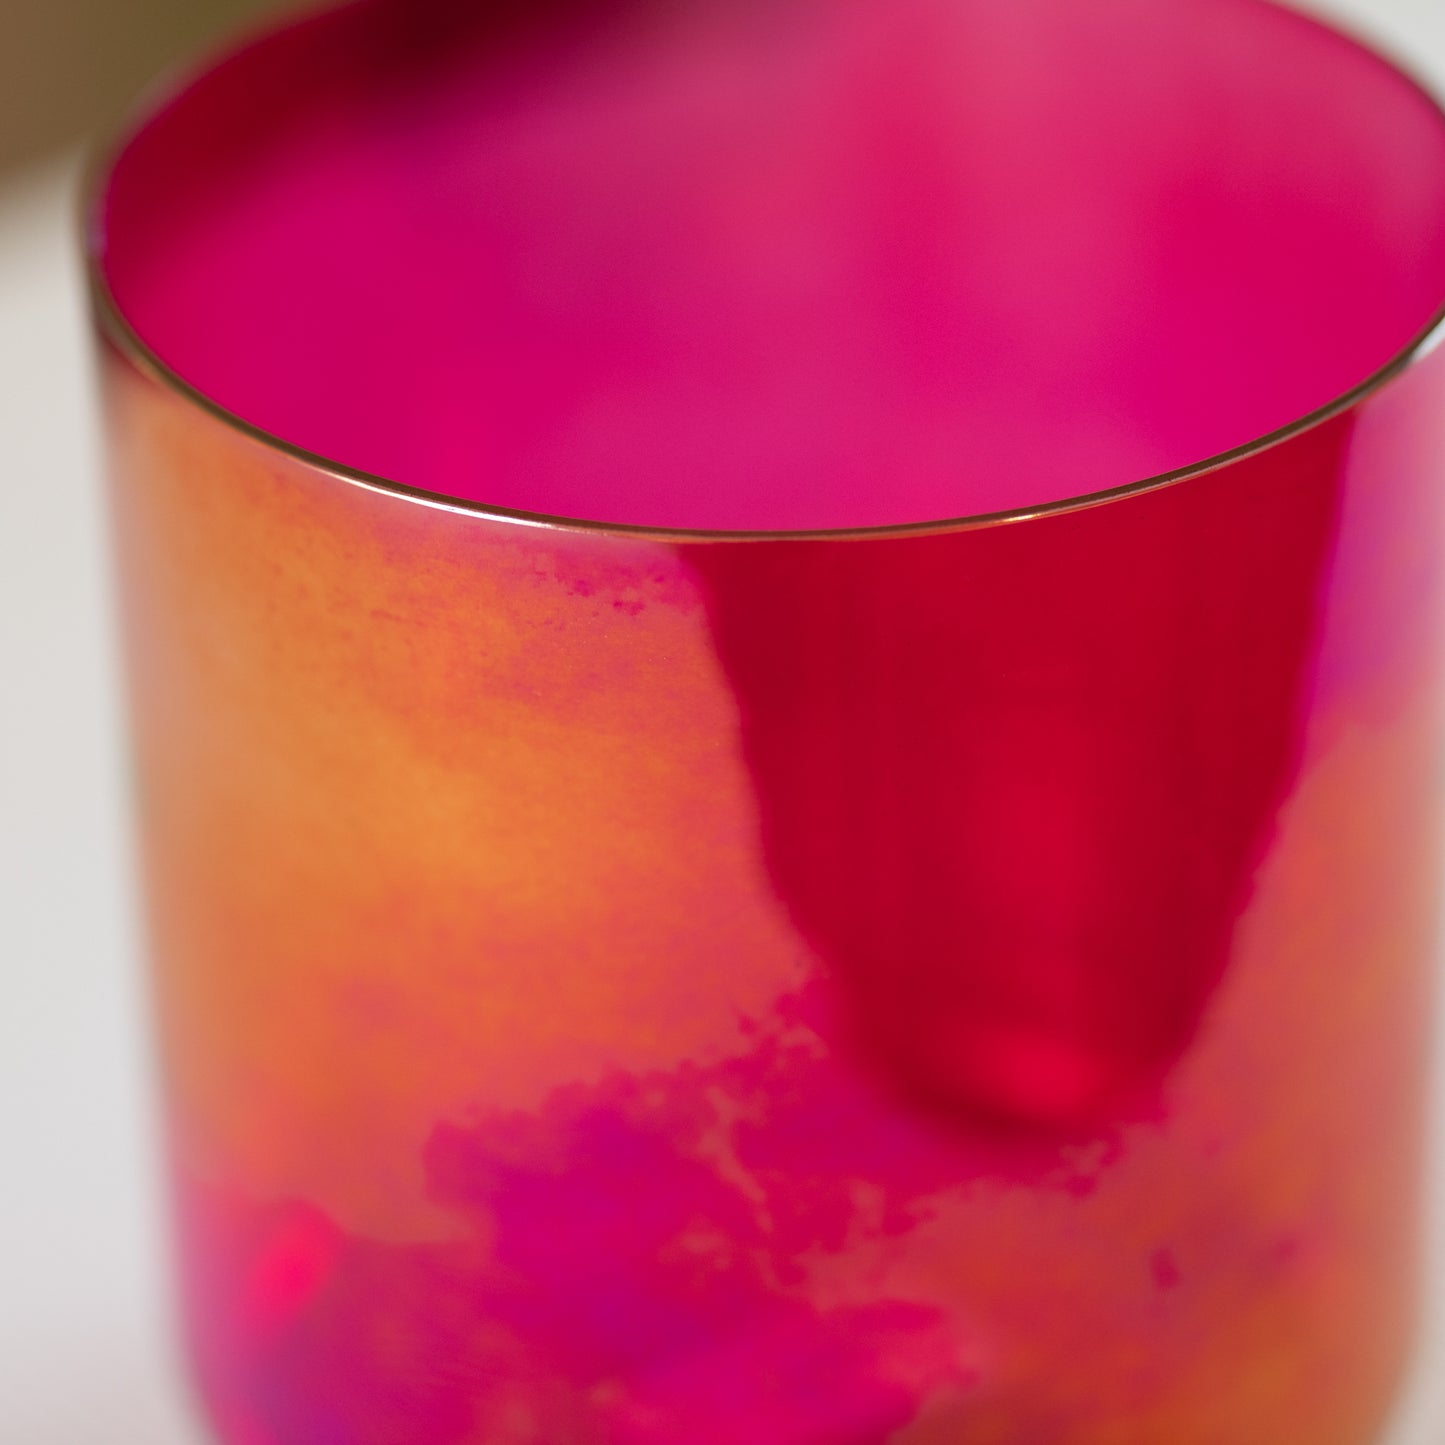 7" B+0 Ruby Color Crystal Singing Bowl, Prismatic, Sacred Singing Bowls